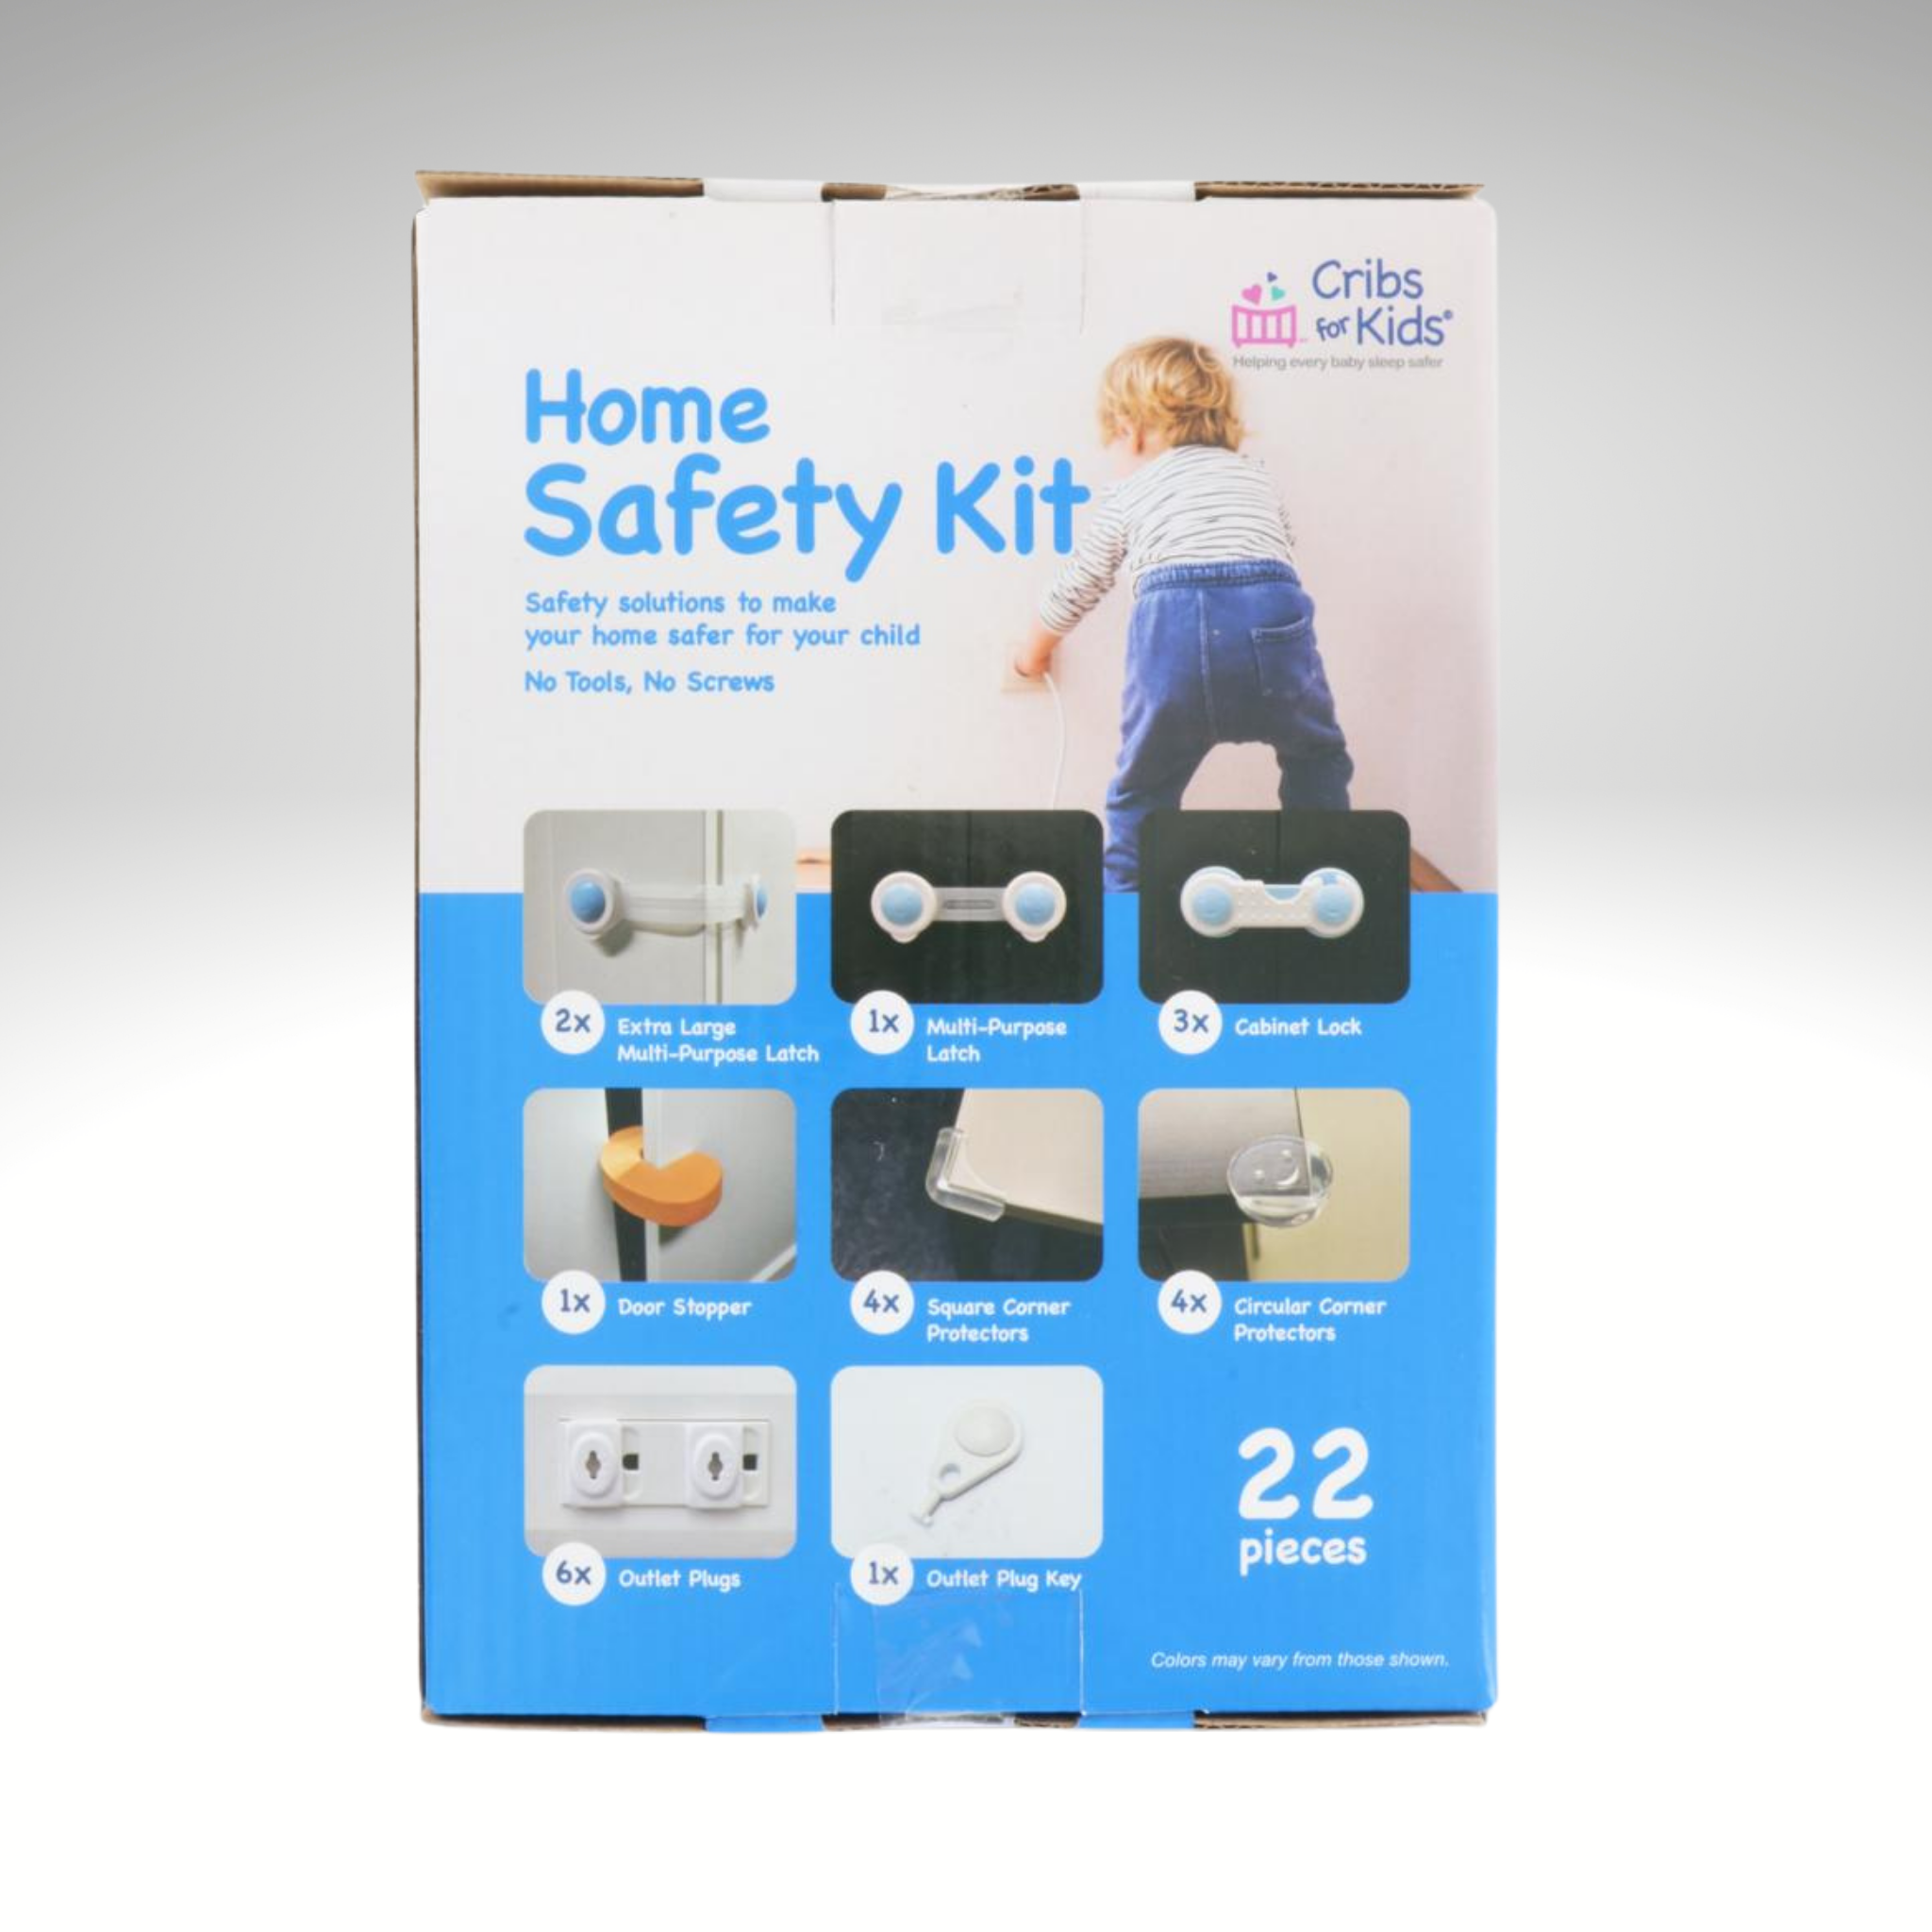 Home Safety Kit – ette cetera!